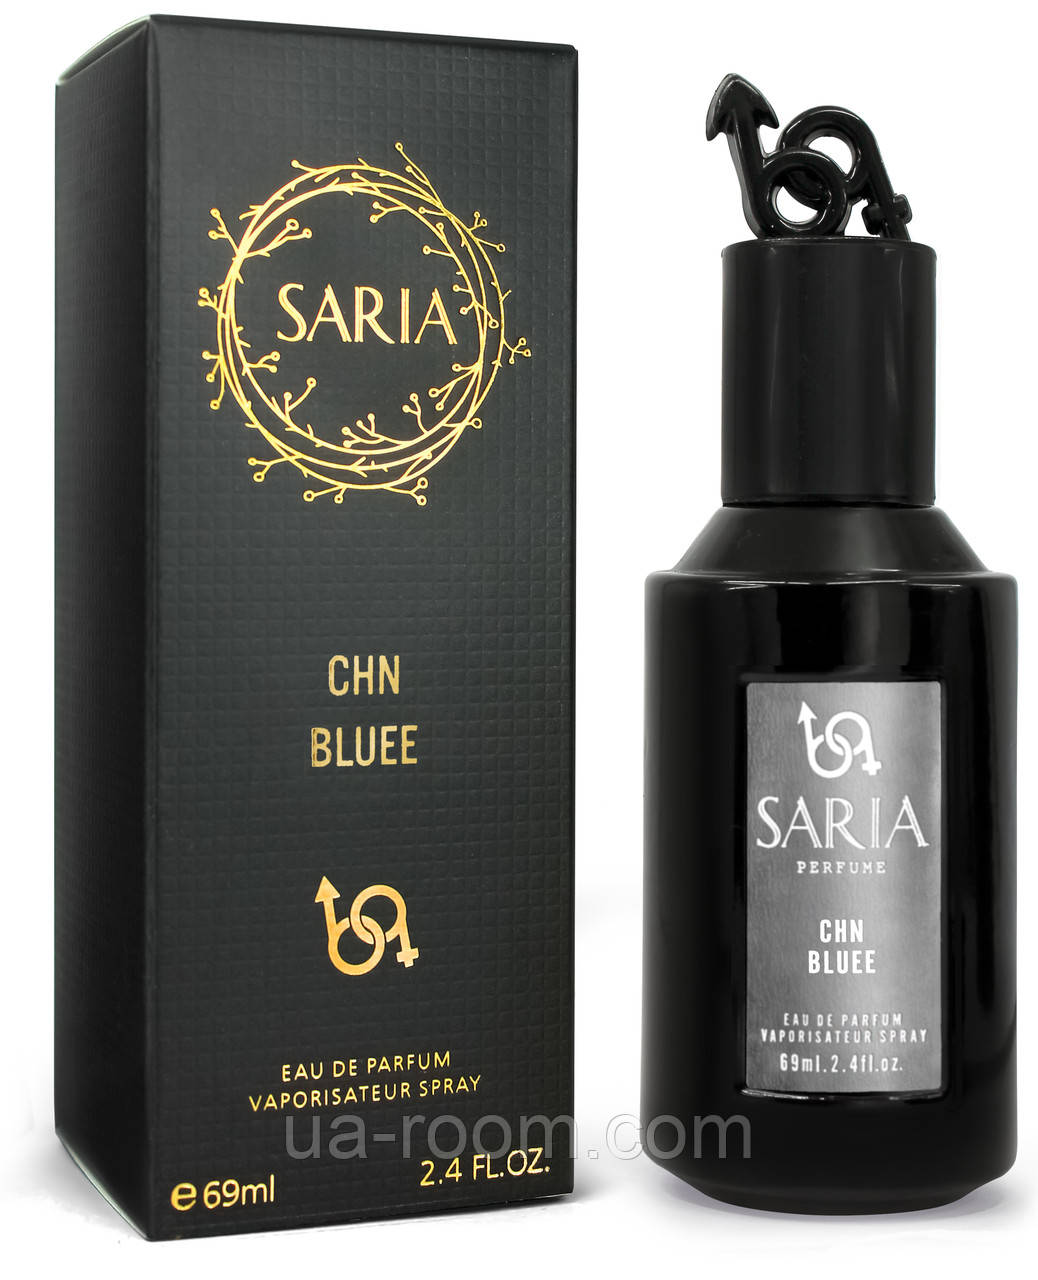 Saria Chn Bluee, мужские (Chanel Bleu de Chanel), 69 ml